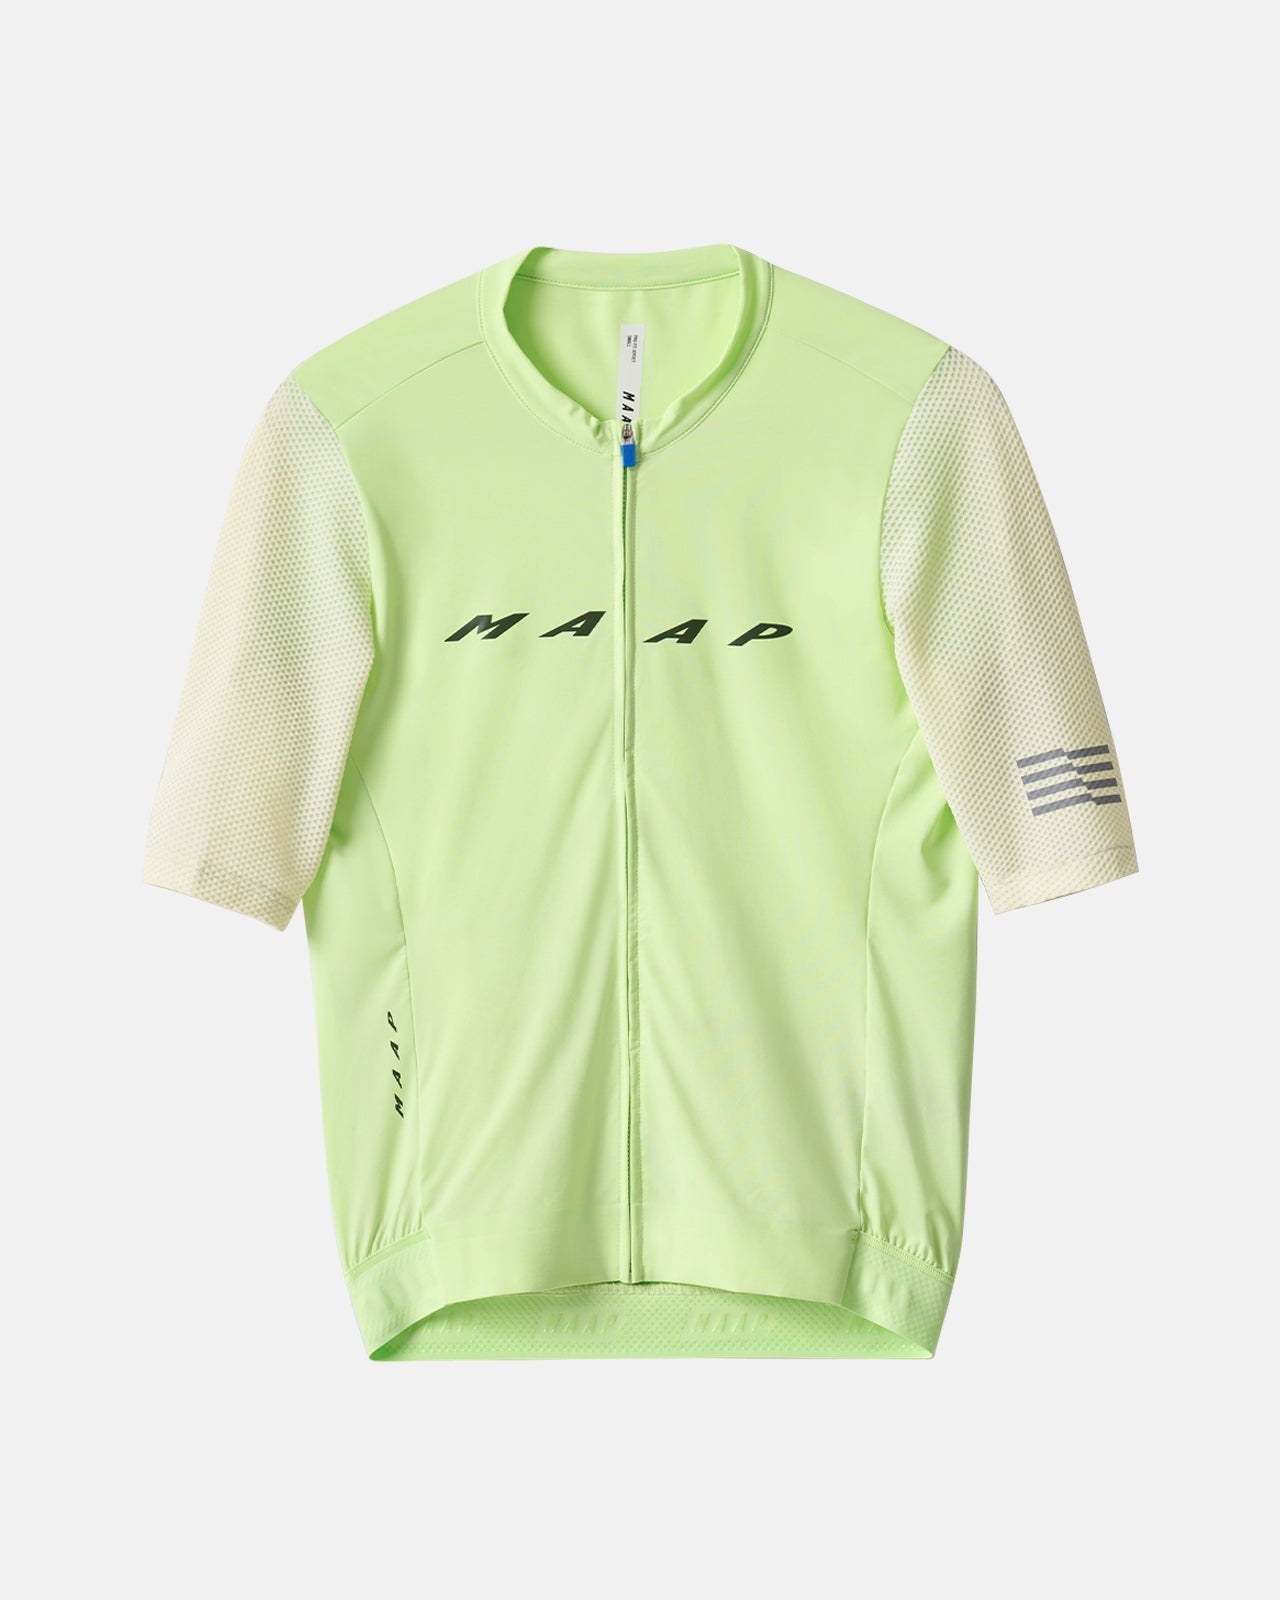 Men's Short Sleeve Cycling Jerseys - MAAP Short Sleeve Jerseys 